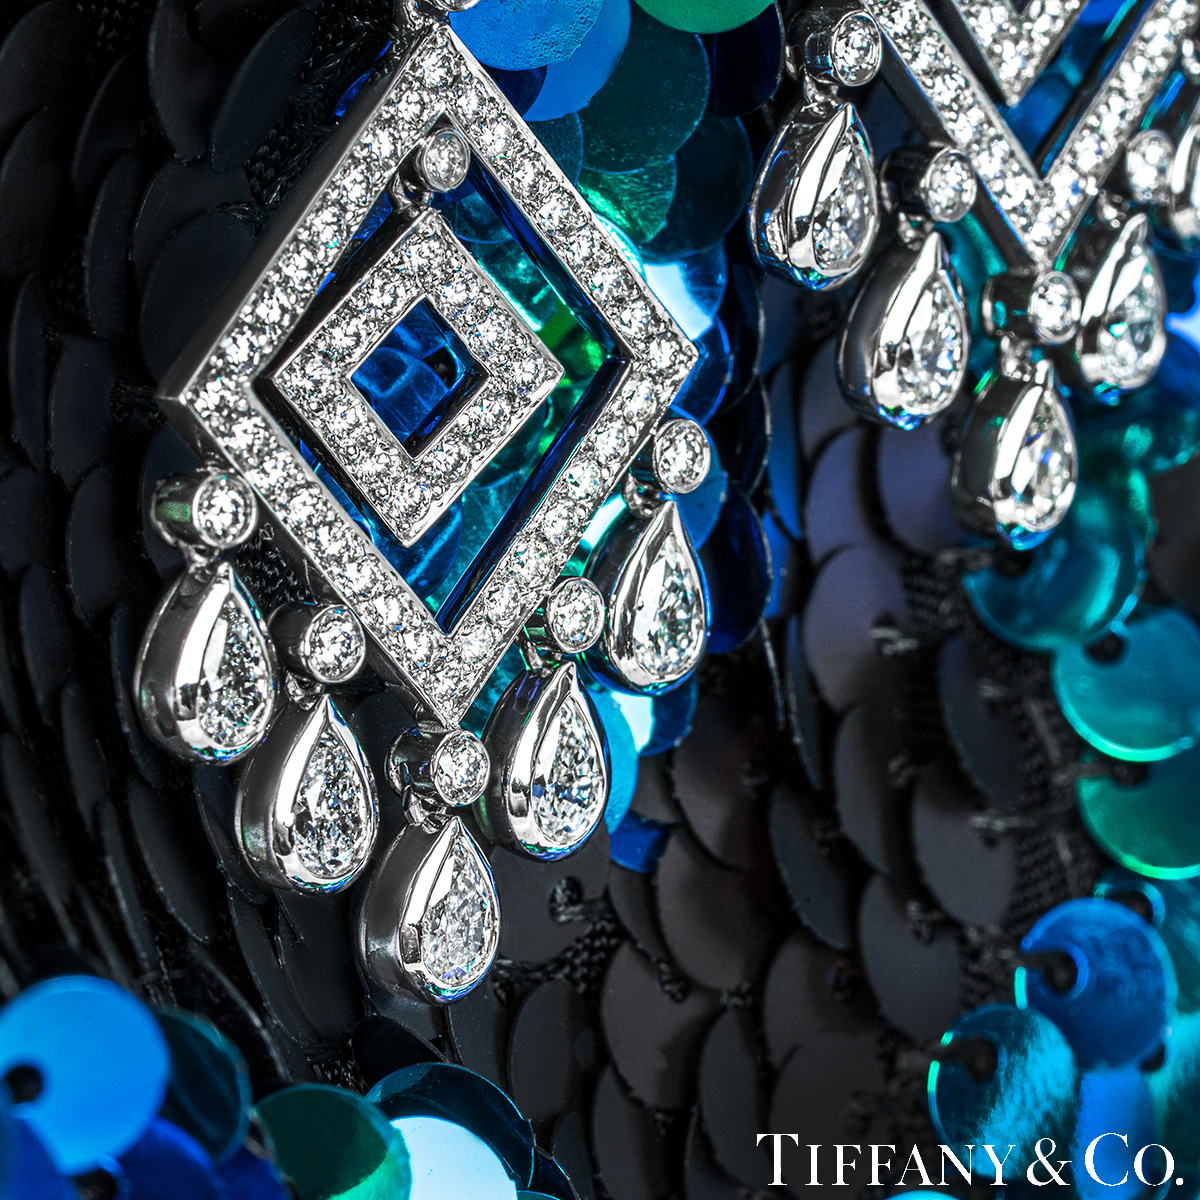 Tiffany & Co. Platinum Diamond Legacy Chandelier Earrings